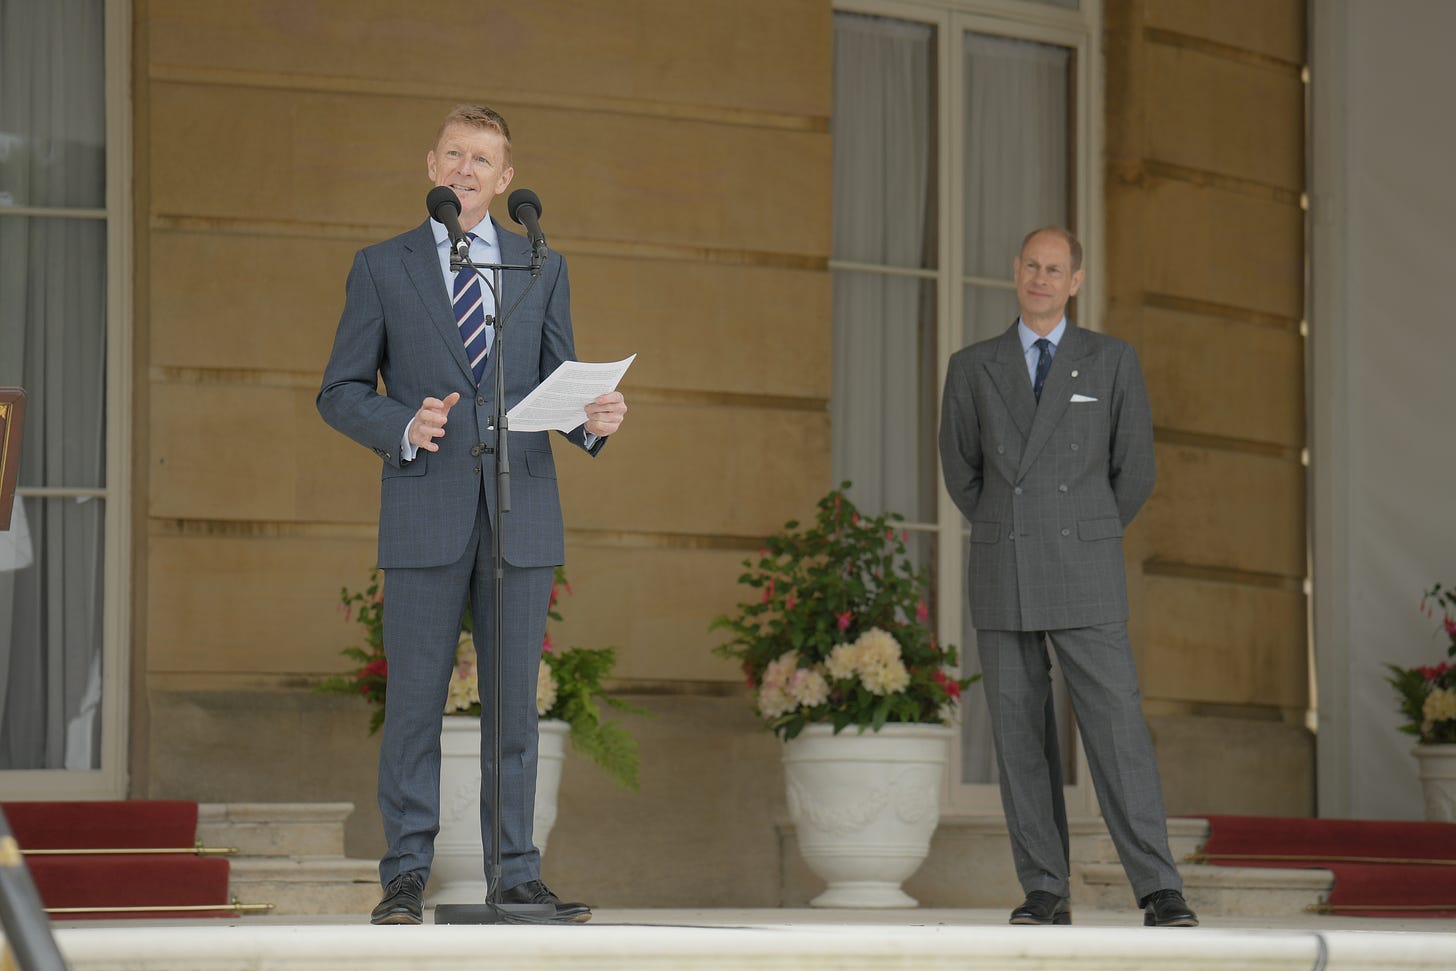 Tim Peake gives an inspirational speech at Buckingham Palace. Credit Ian Smithers, DofE.